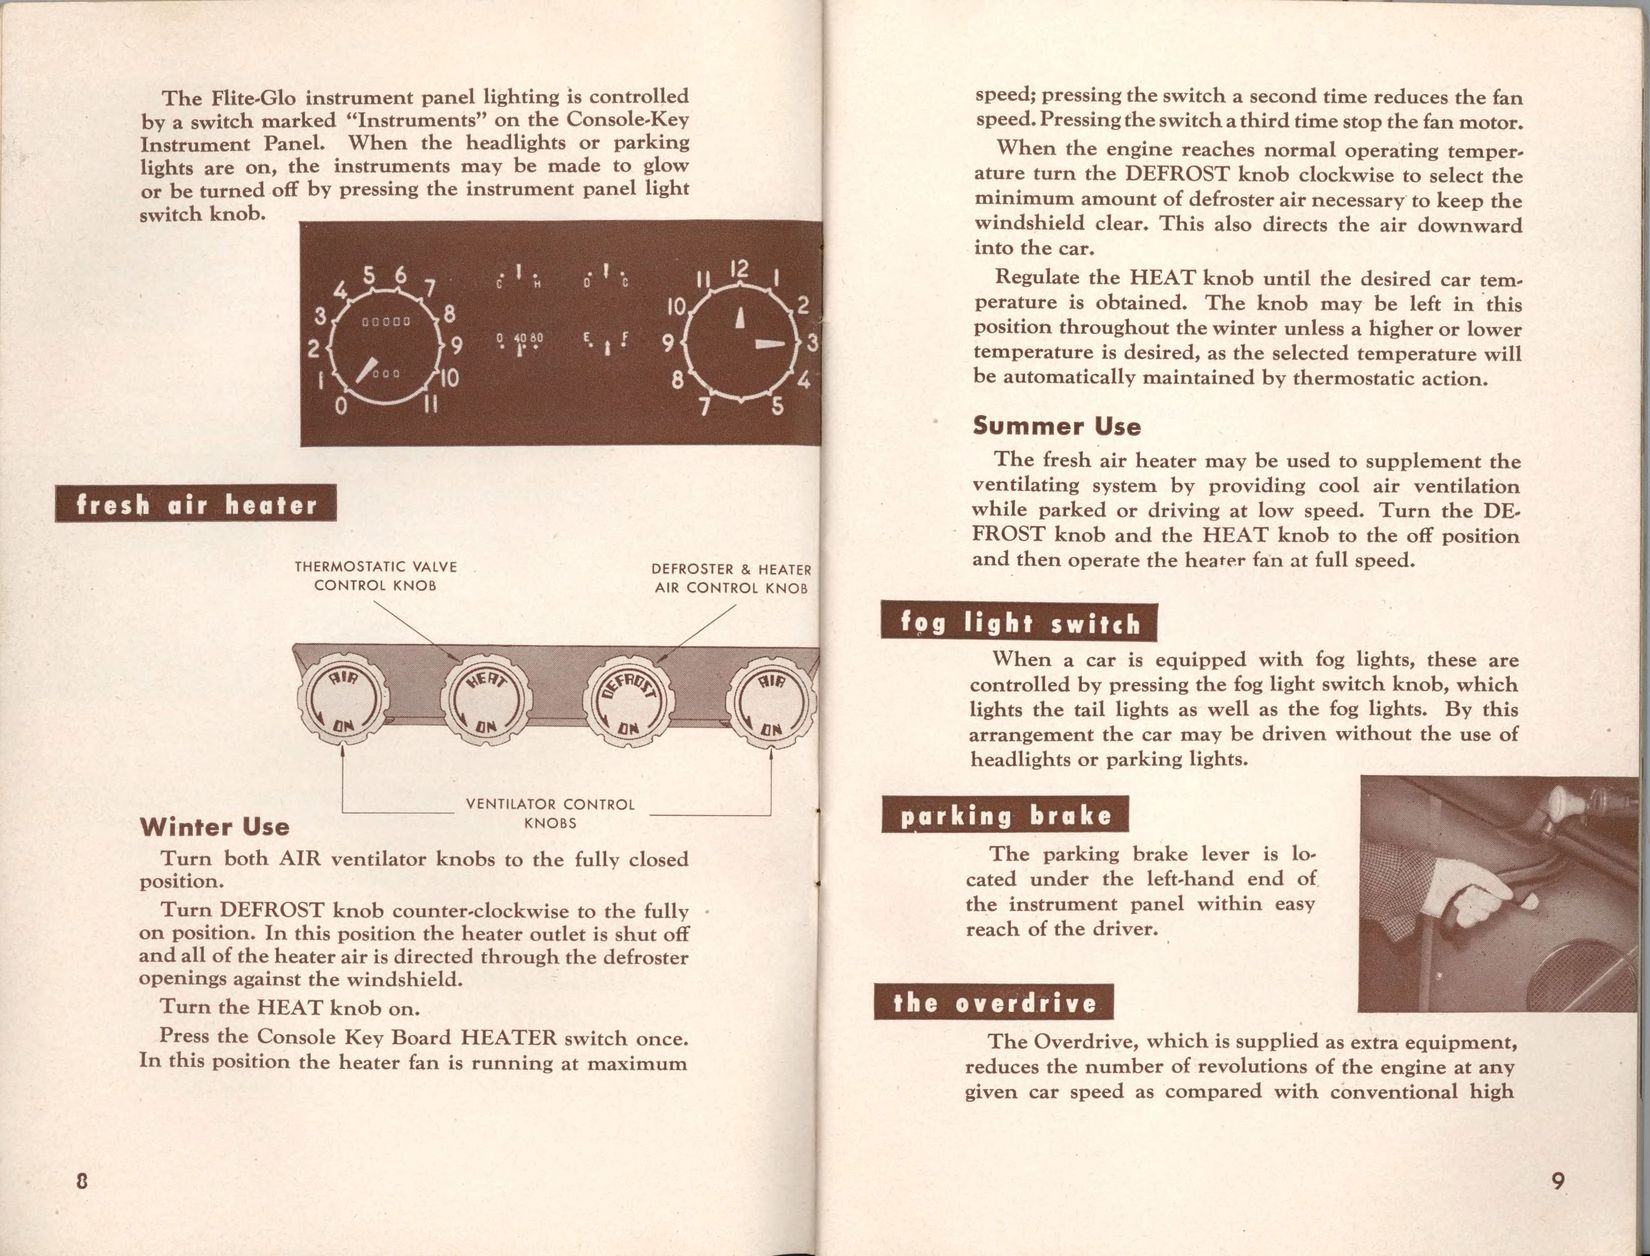 1948 Packard Manual-08-09